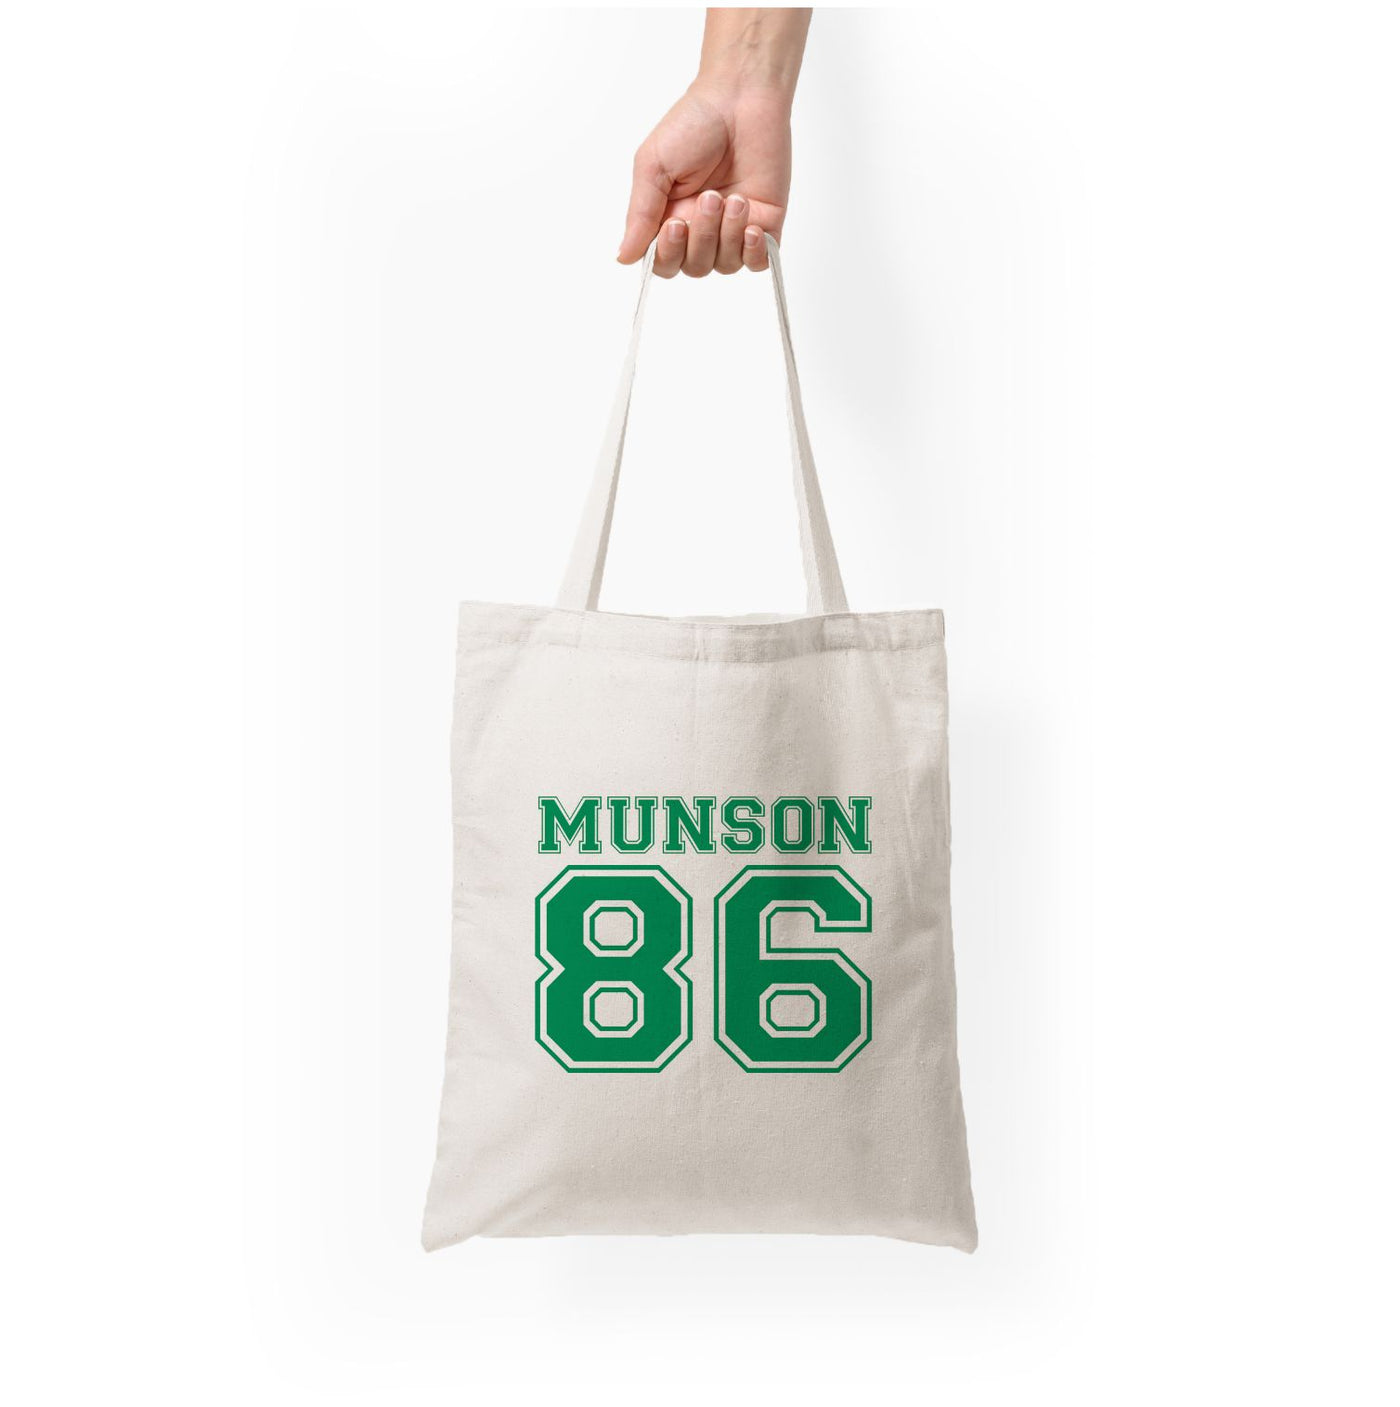 Eddie Munson 86 - Green Tote Bag